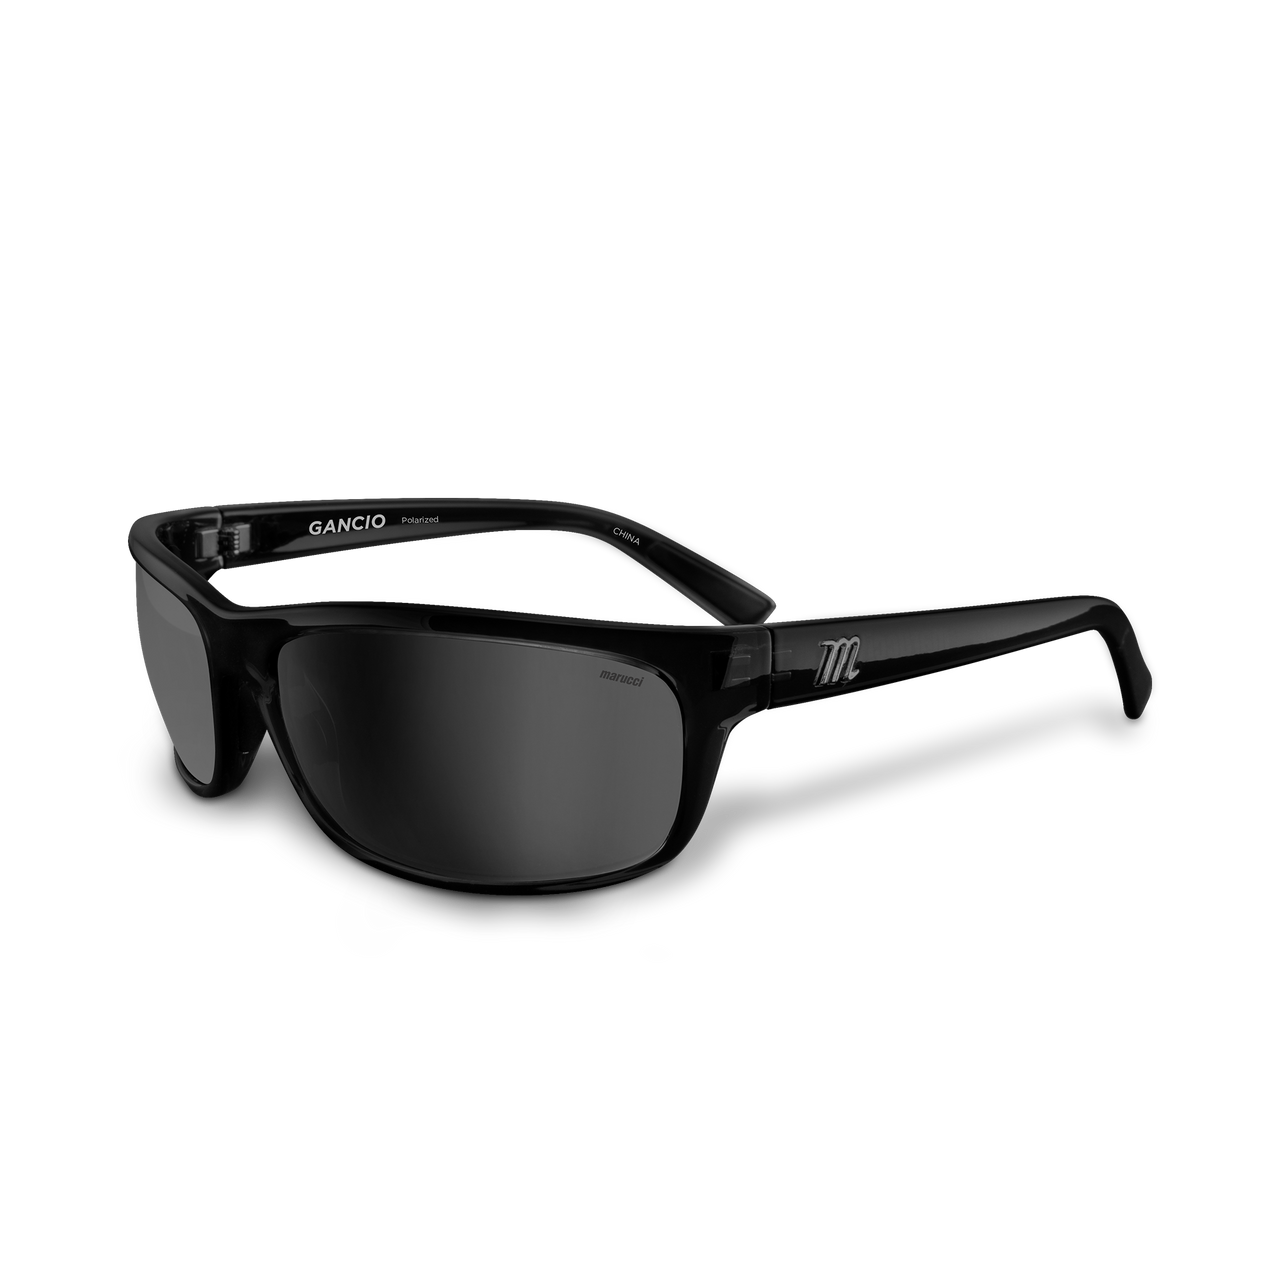 Marucci Gancio Lifestyle Sunglasses - Translucent Black Translucent - Rose Lens With Black Mirror - Polar 